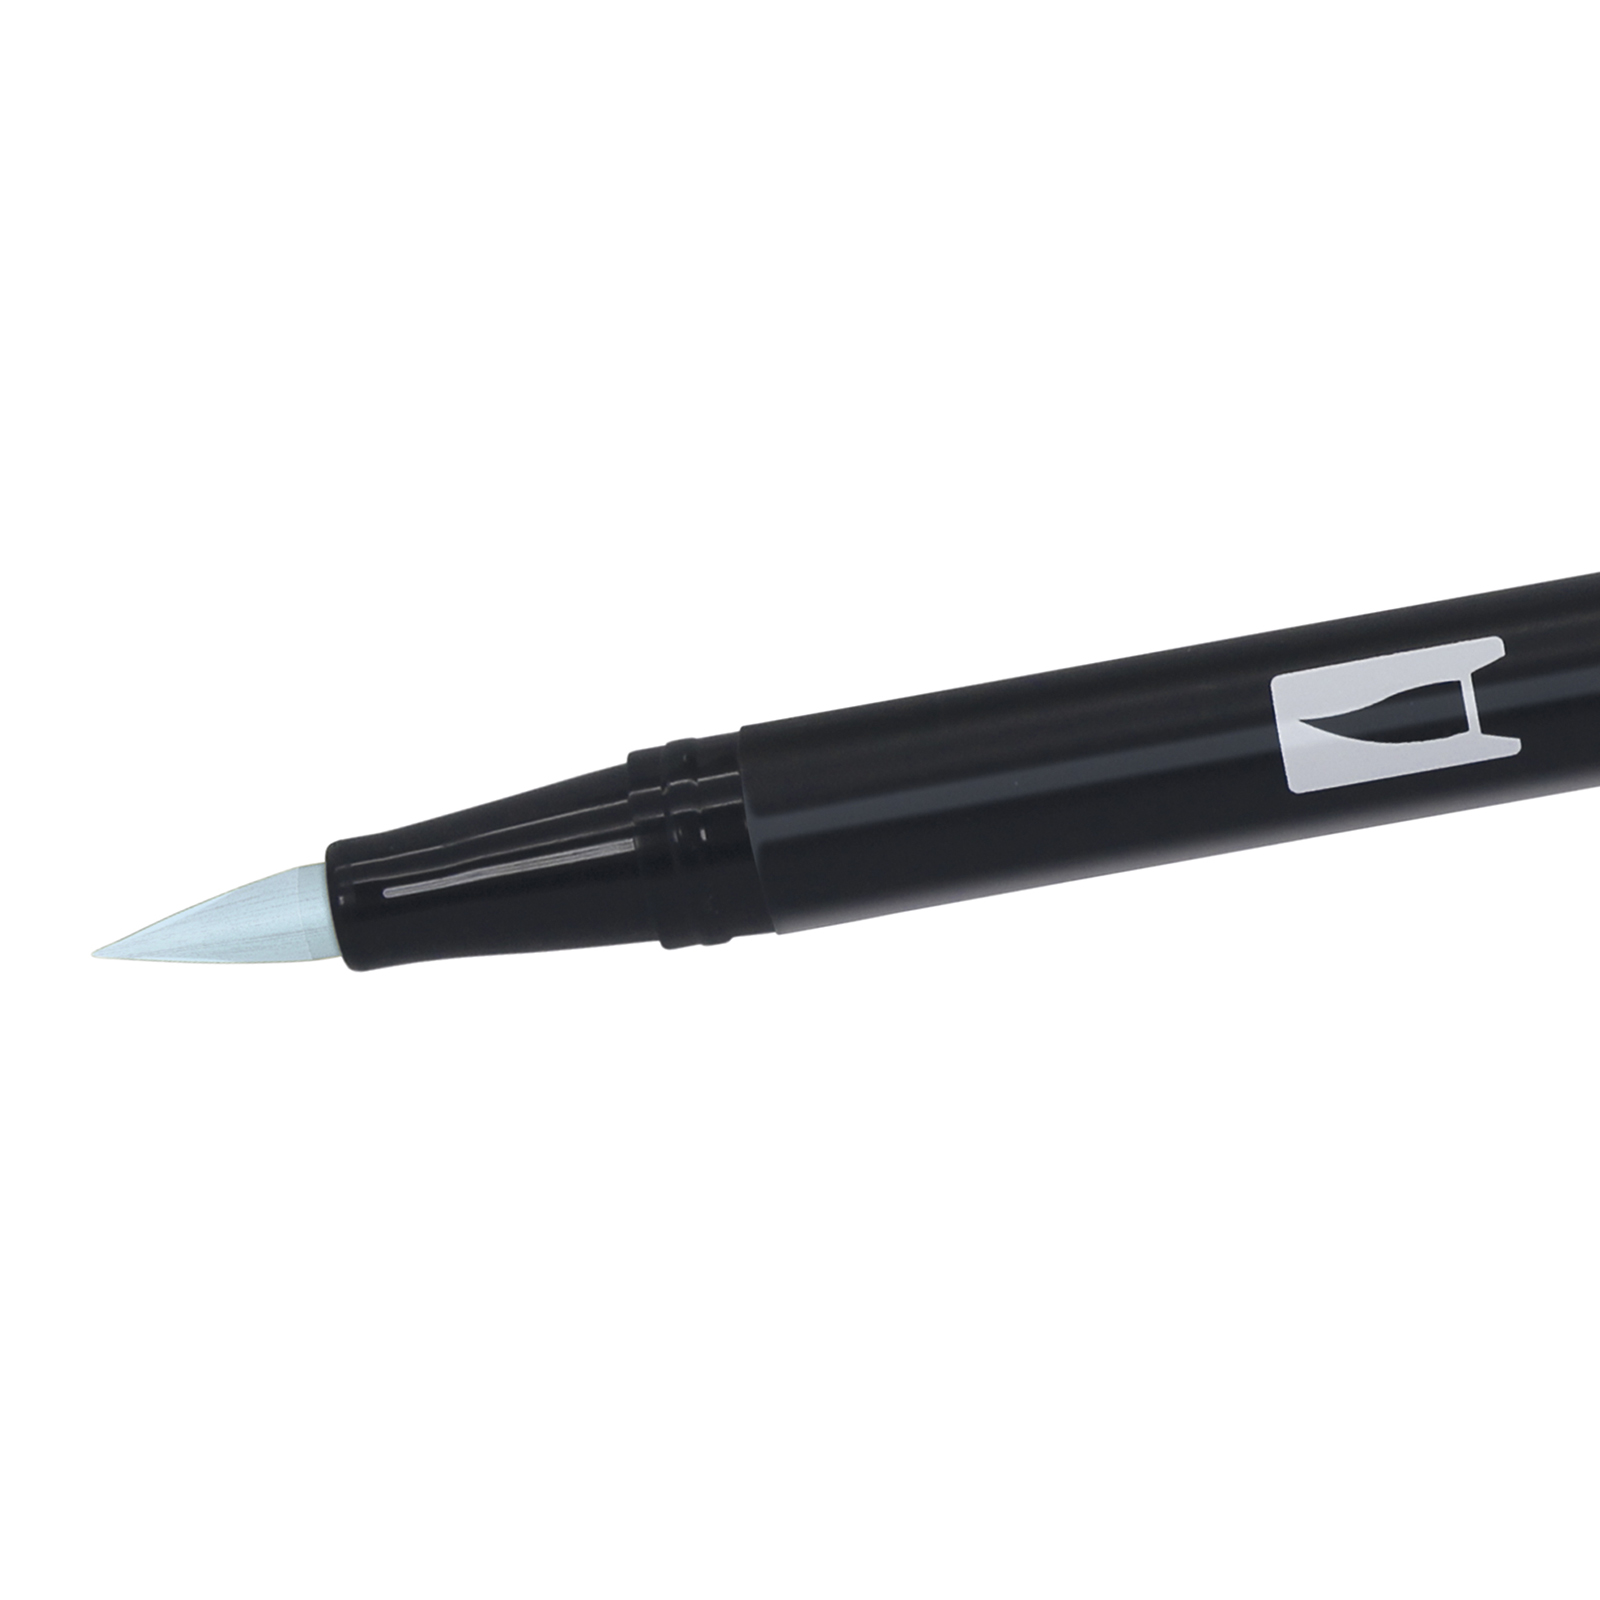 Tombow Dual Brush Pen ABT – Cityluxe